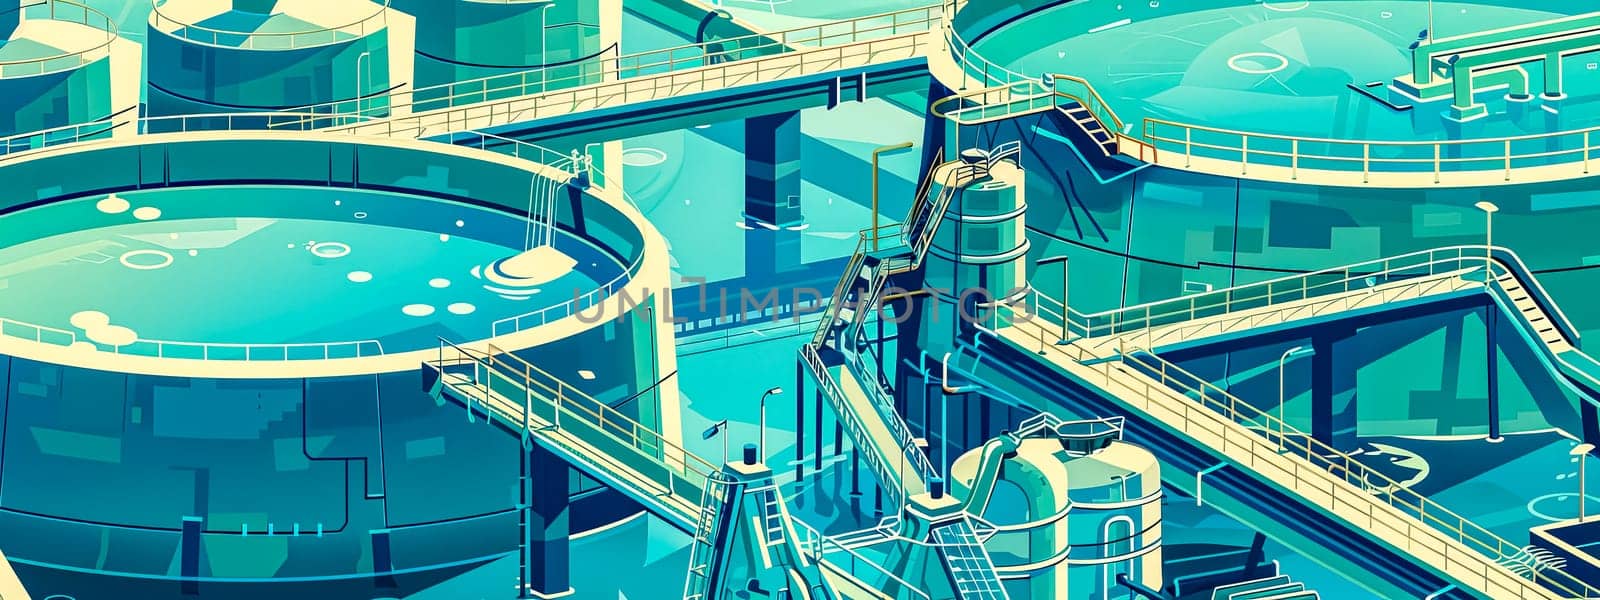 Stylized Illustration of a Futuristic Water Treatment Plant.